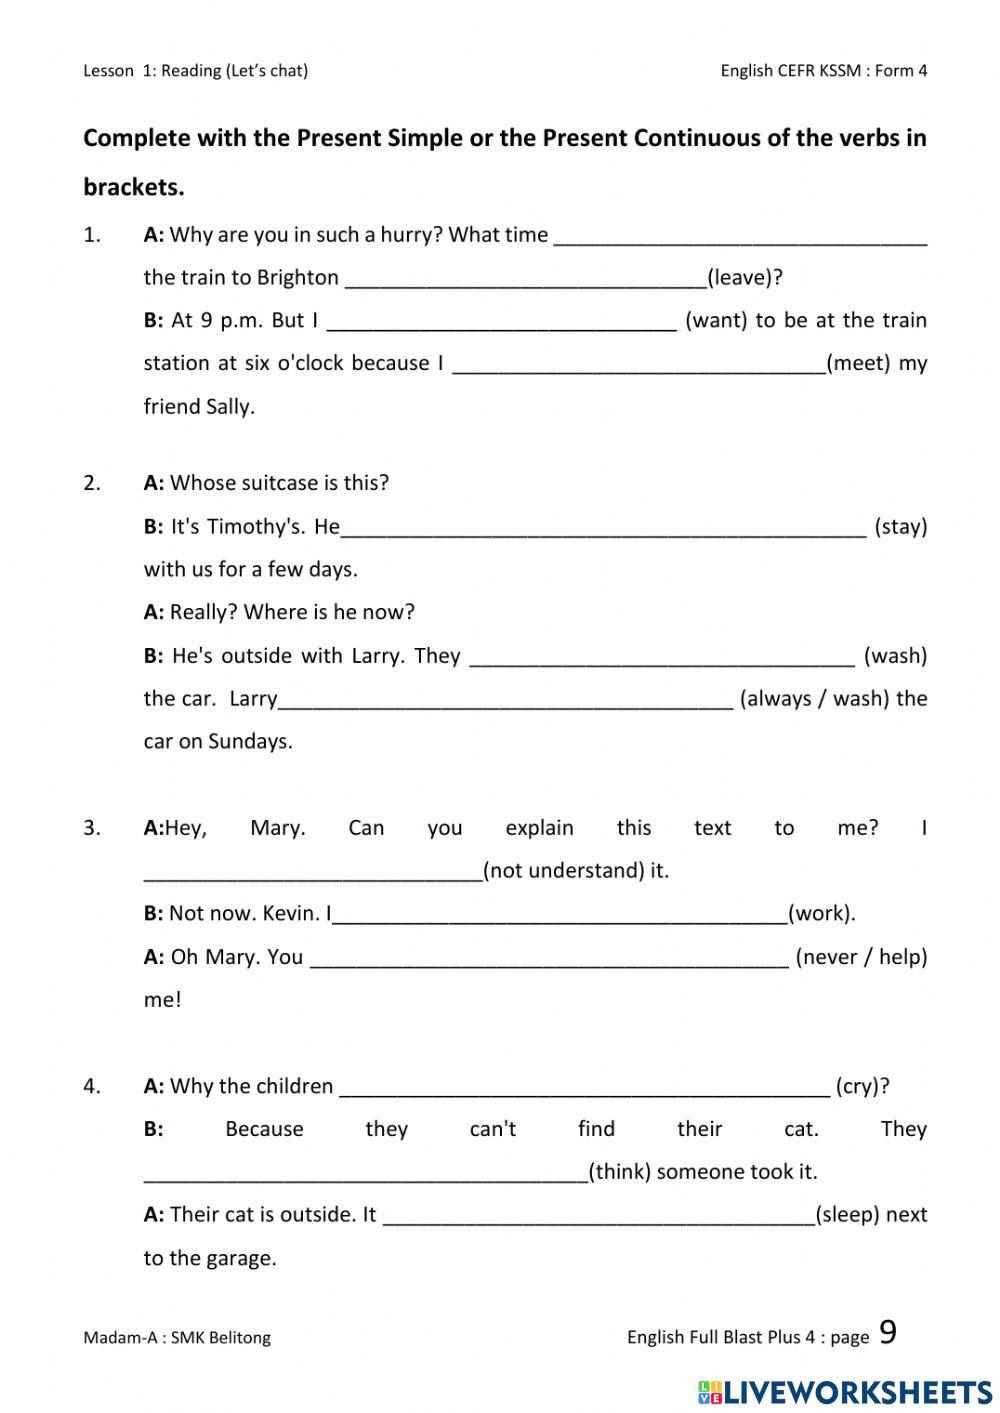 Cefr Form 4-Lesson 3(Grammar)-page 9